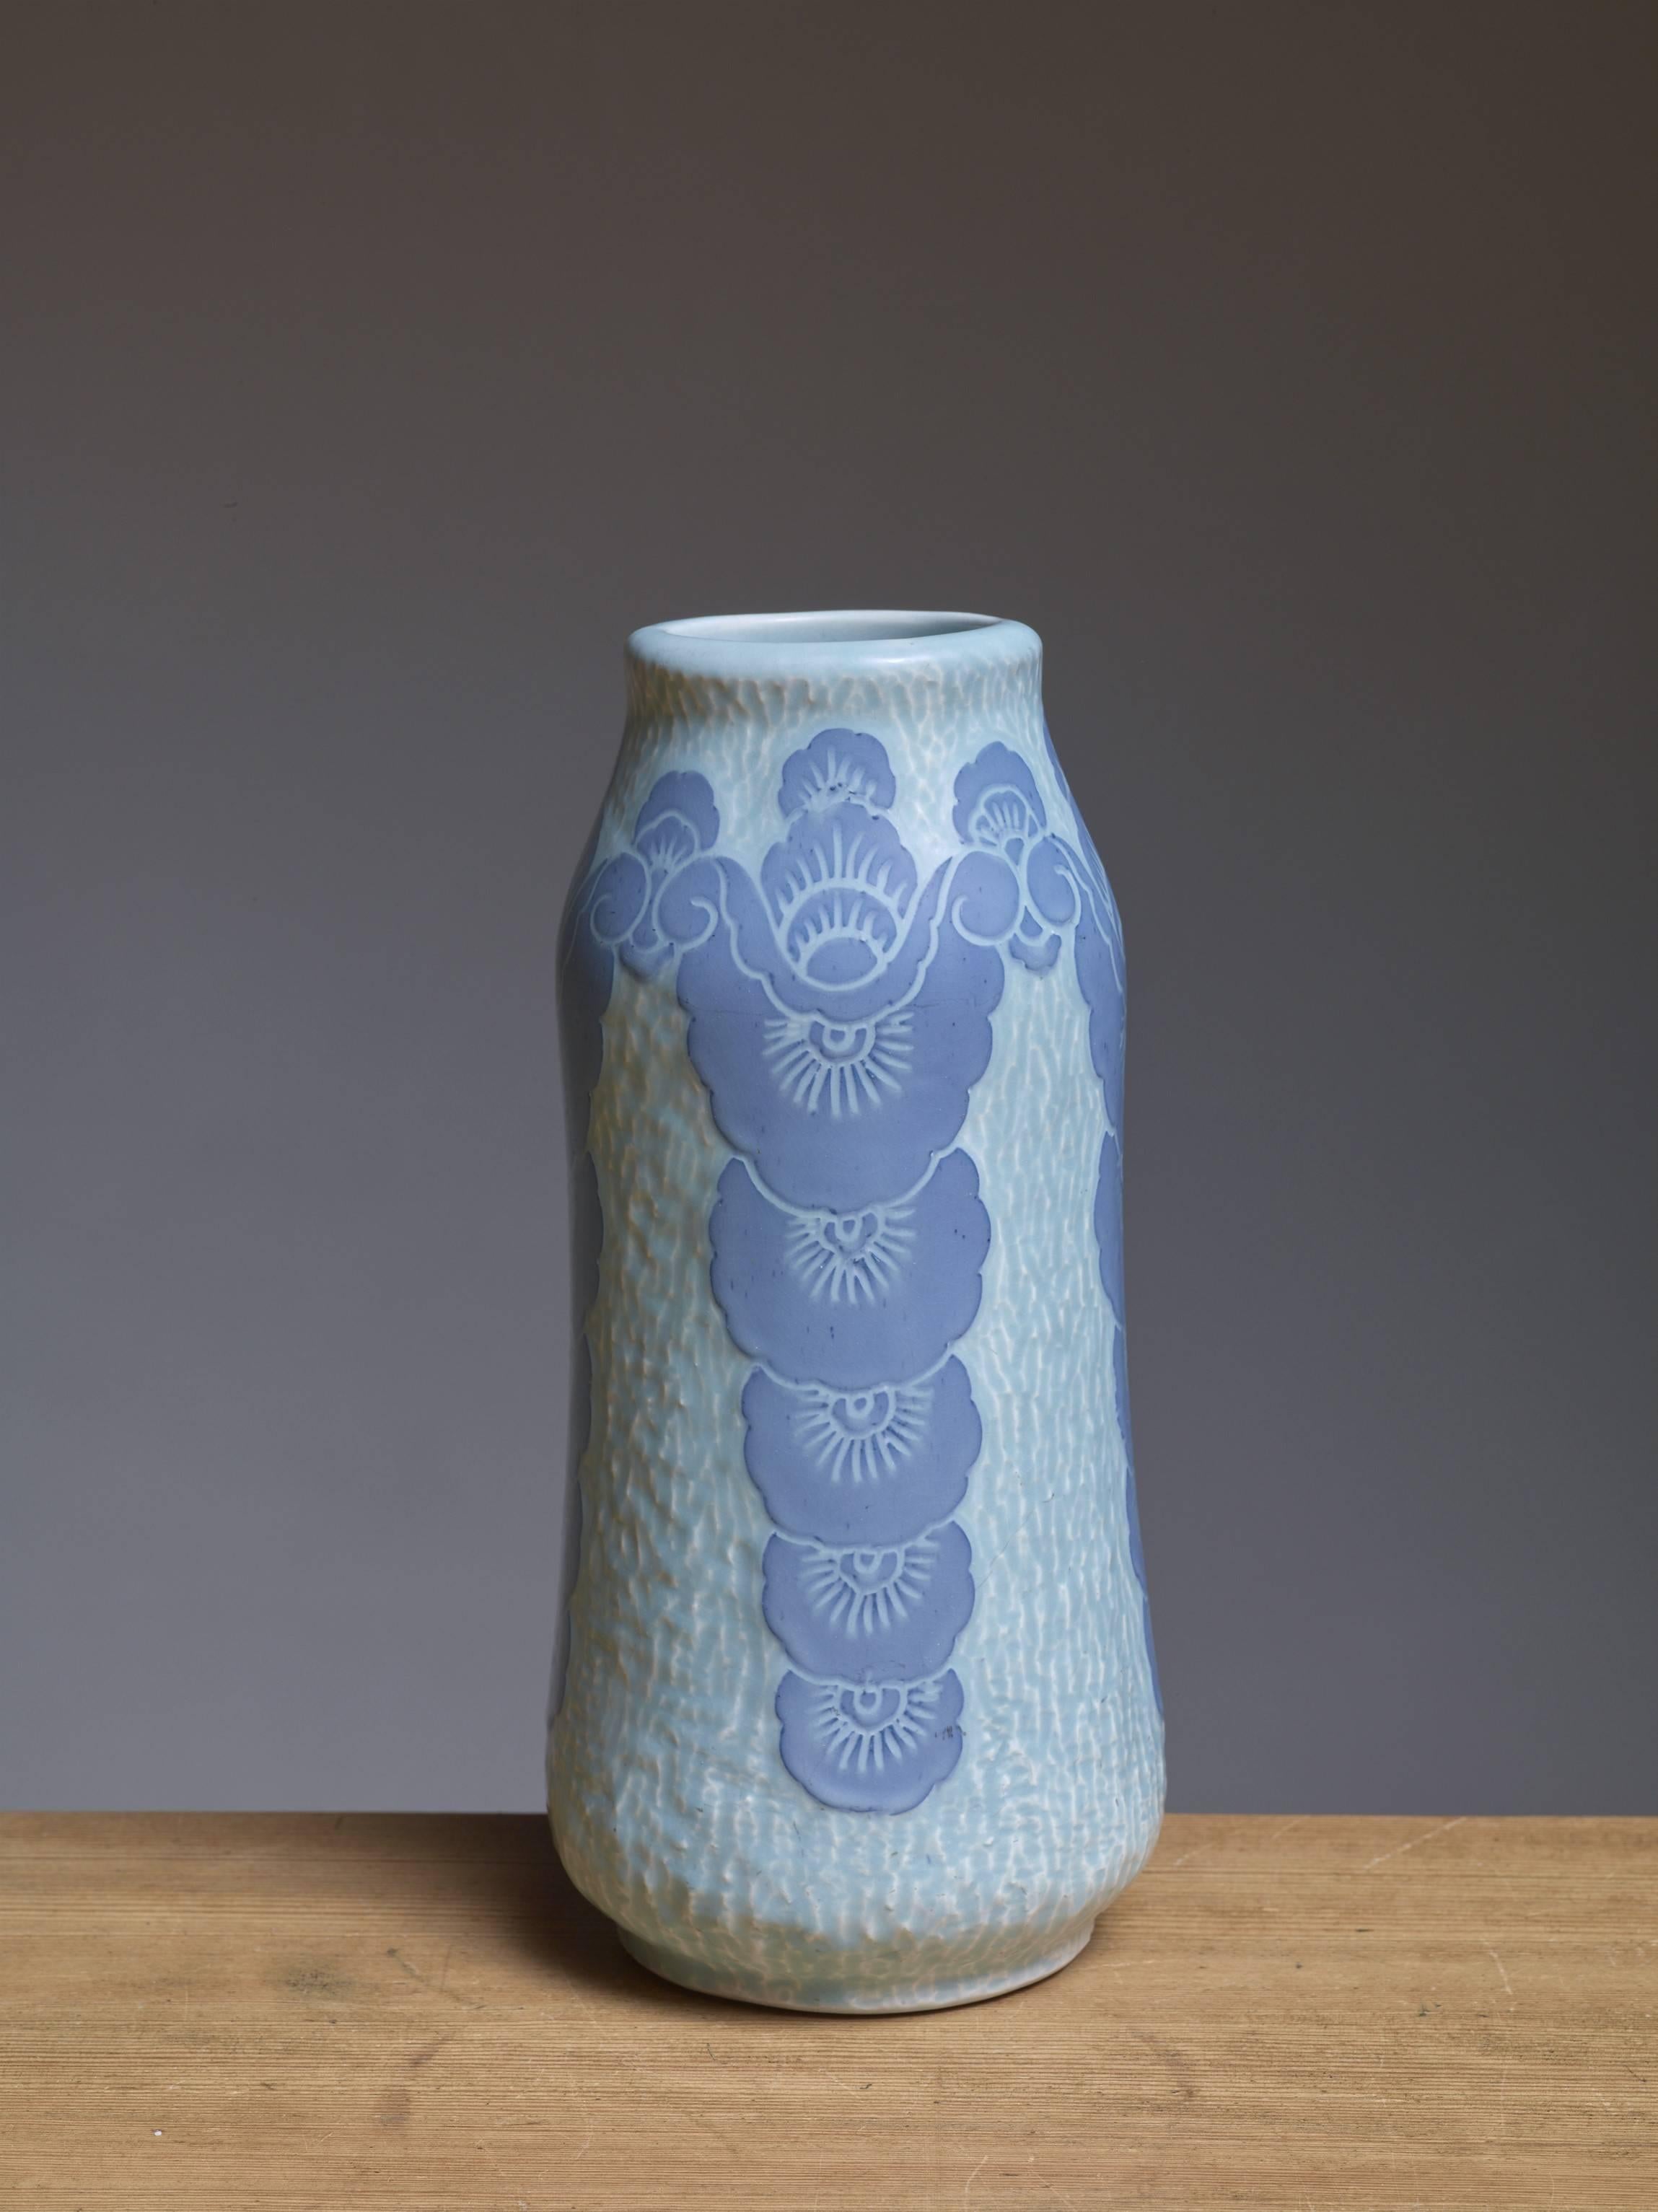 A ceramic vase by Swedish artist Josef Ekberg (1877-1945) for Gustavsberg. The vase has a blue glaze finish with a Sgraffito flower motif.
